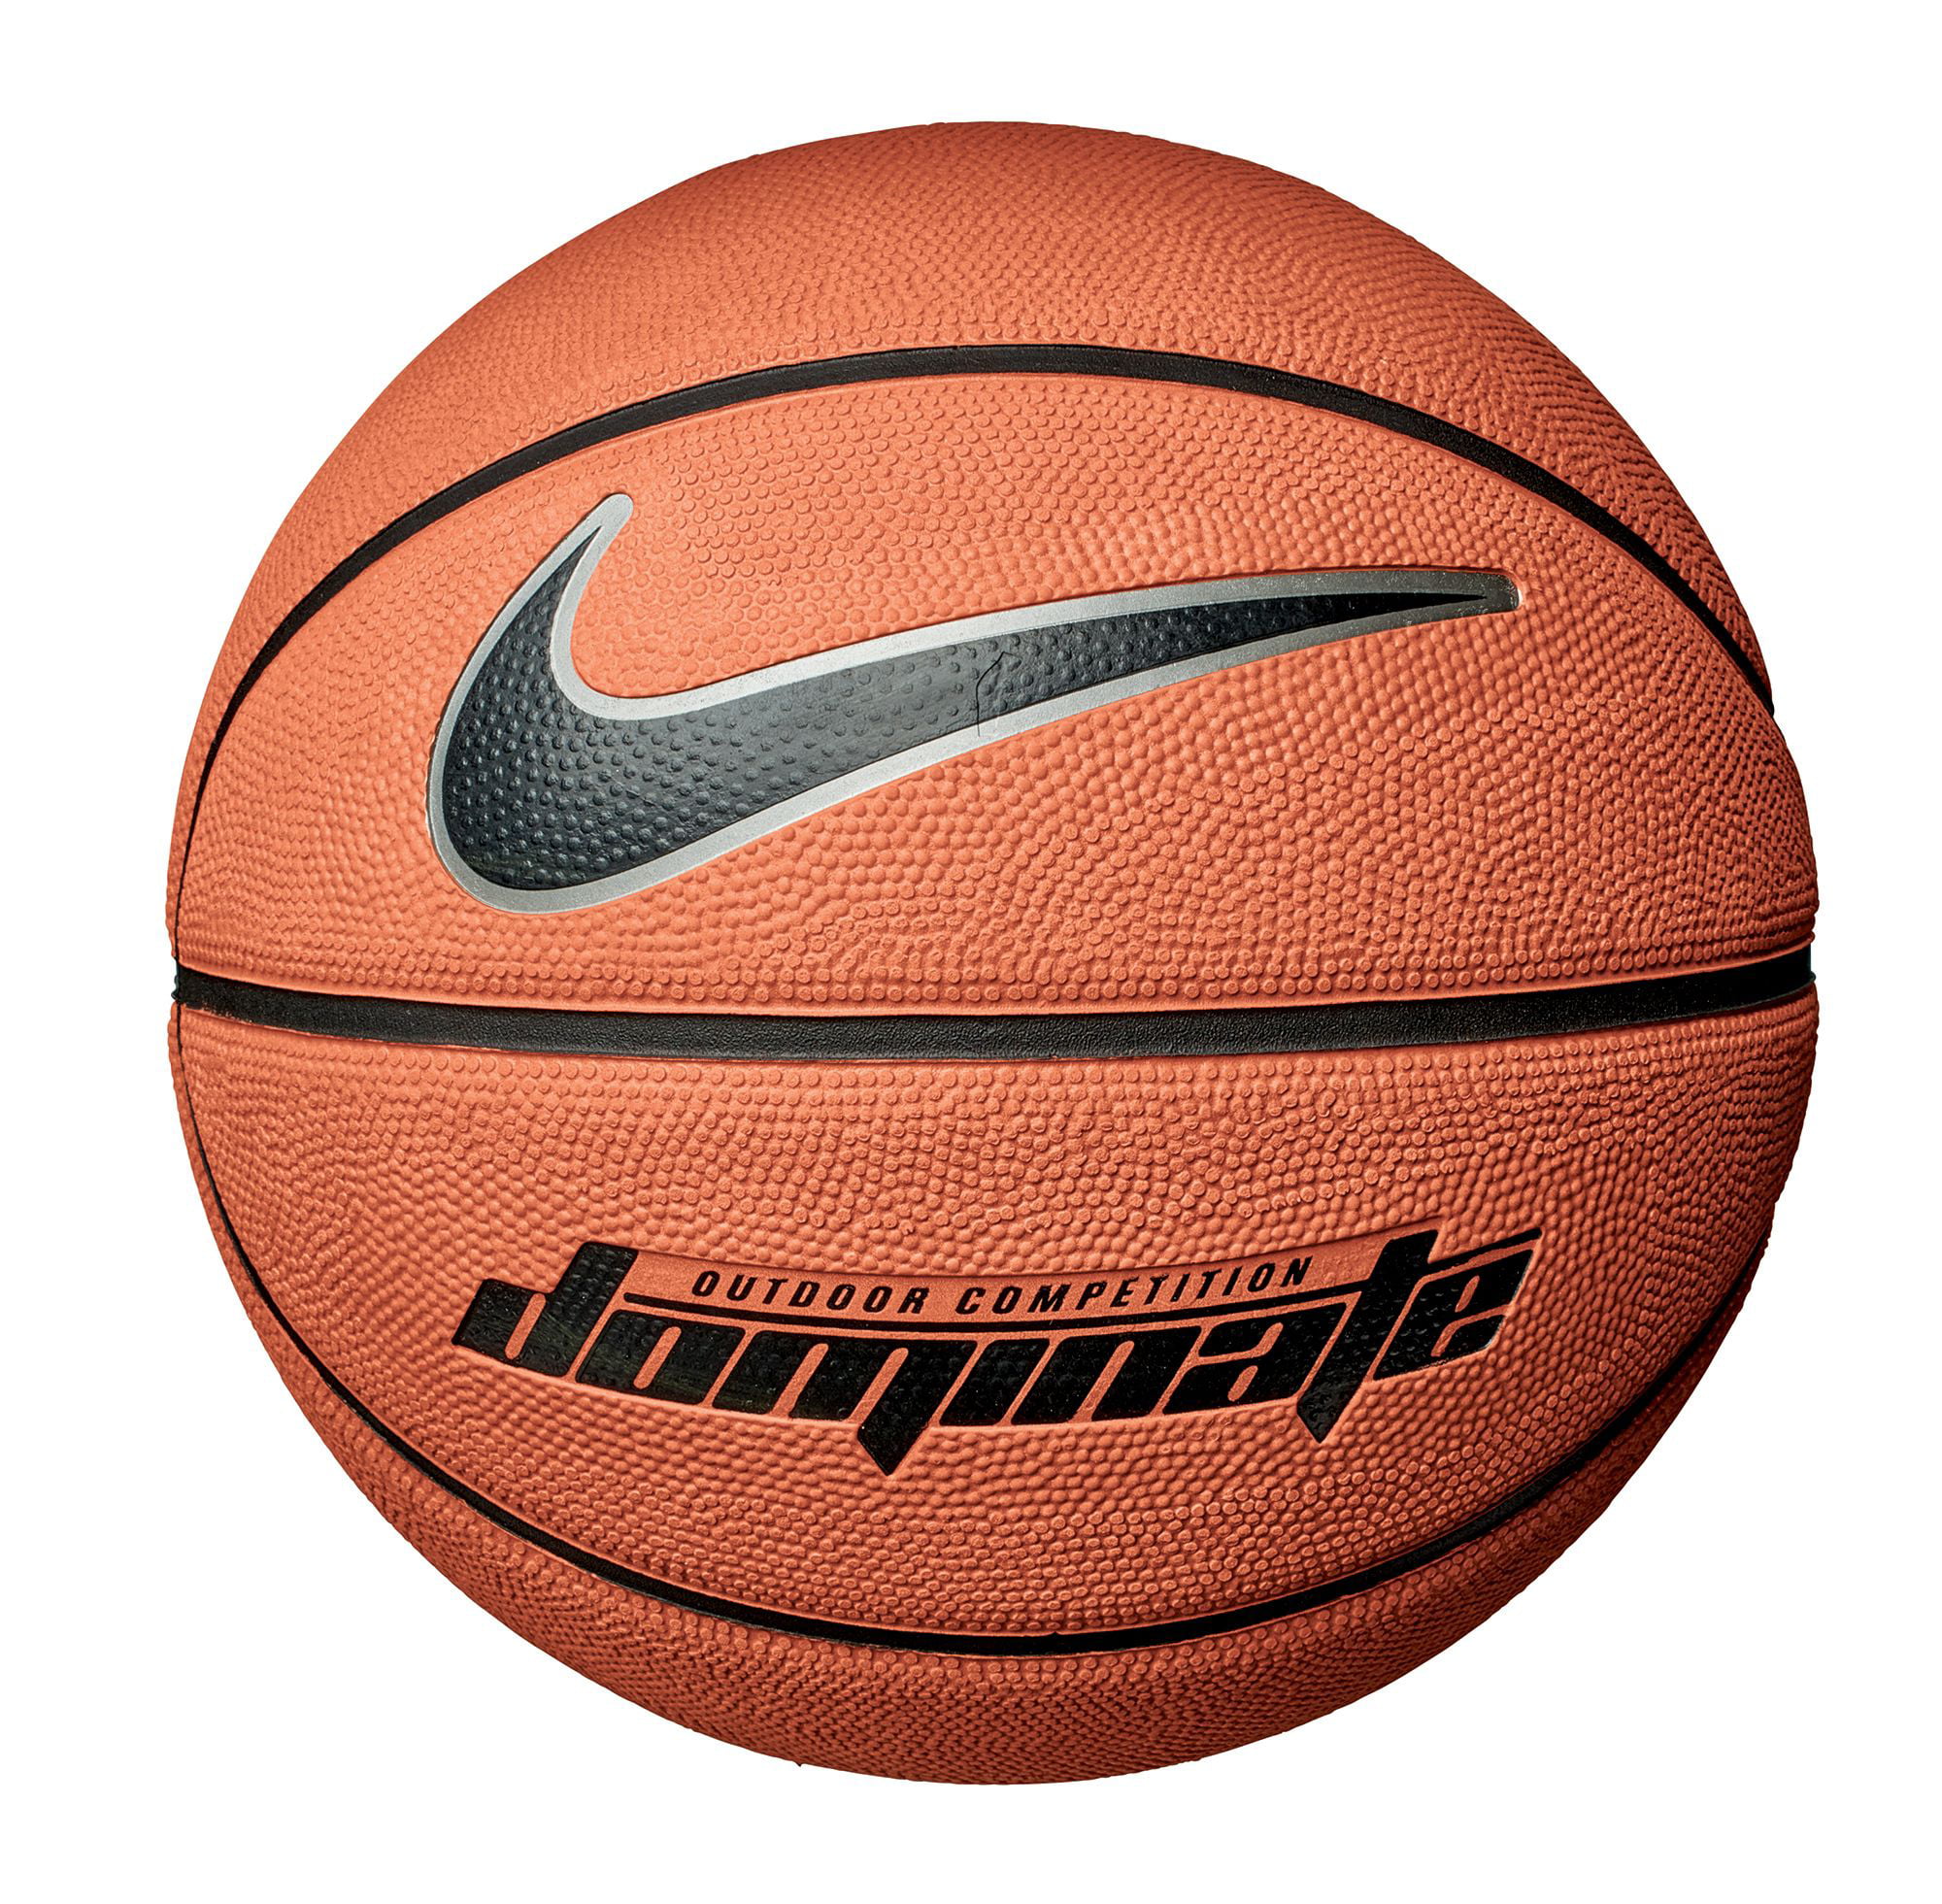 Nike Outdoor Basketball - Walmart.com